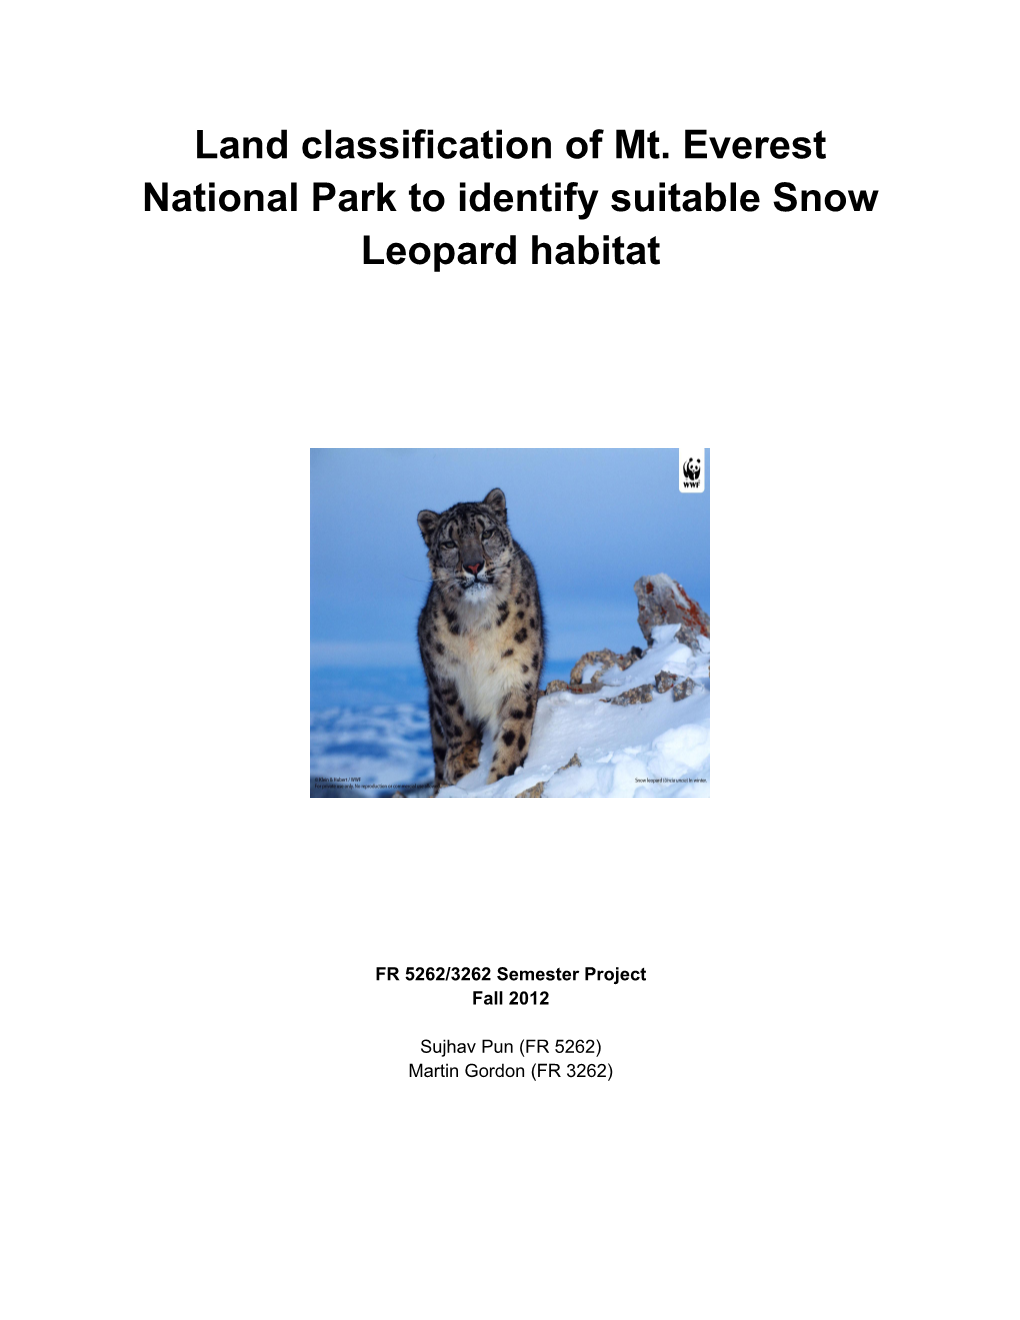 Land Classification of Mt. Everest National Park to Identify Suitable Snow Leopard Habitat